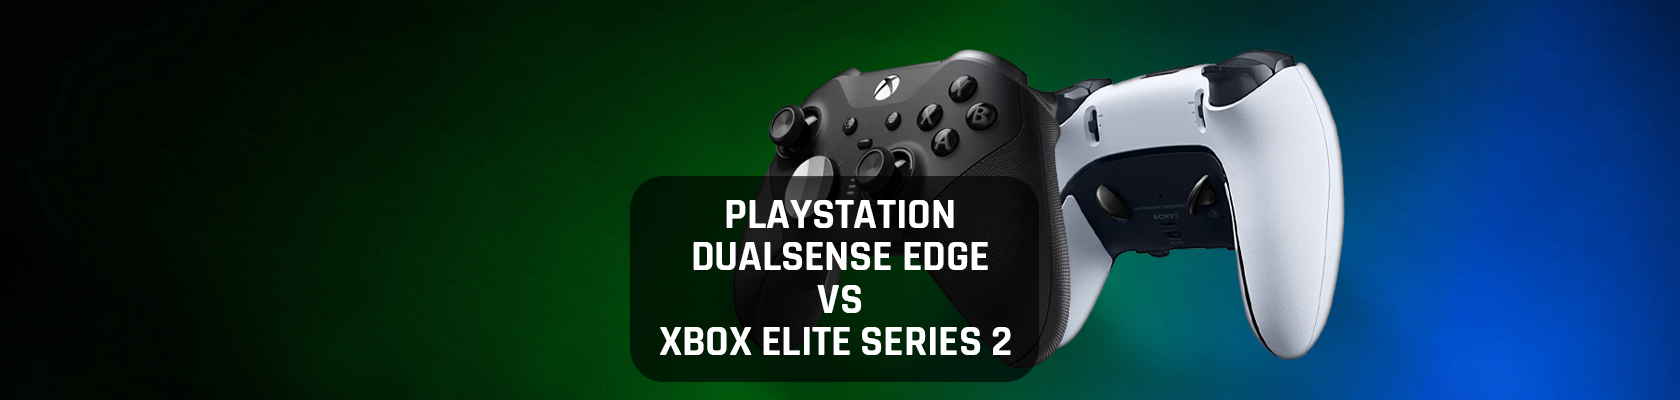 Xbox Elite Series 2 Core review: Puts the DualSense Edge to shame.